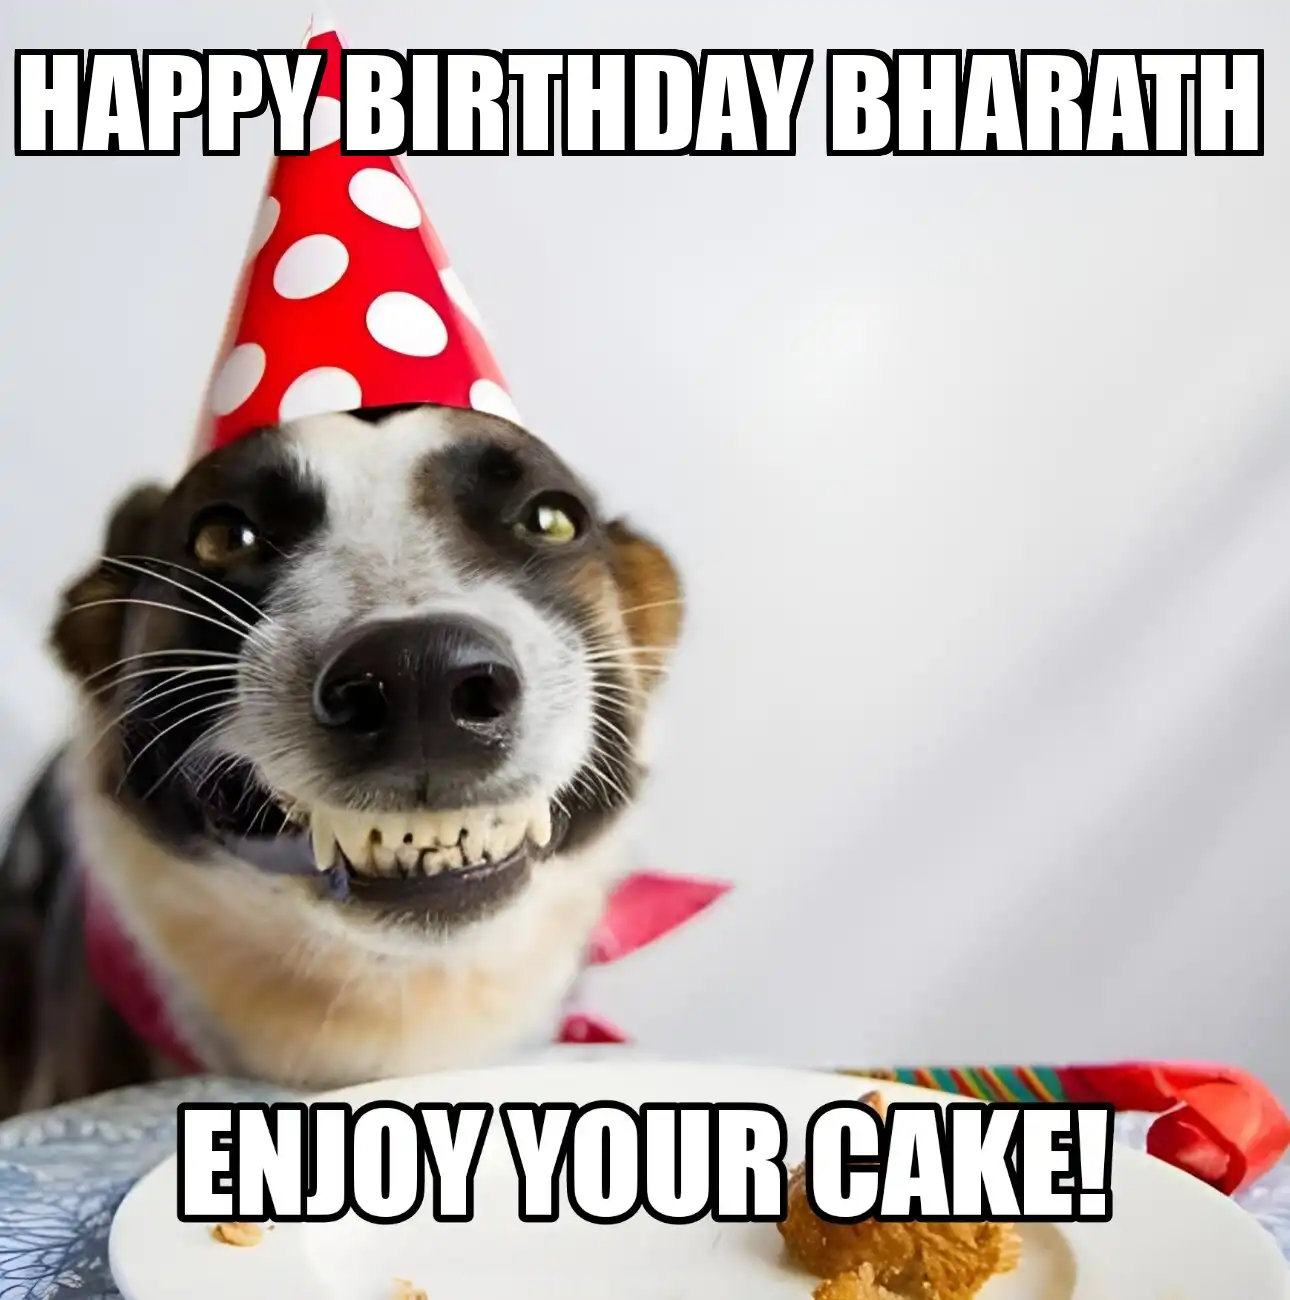 Happy Birthday Bharath Enjoy Your Cake Dog Meme